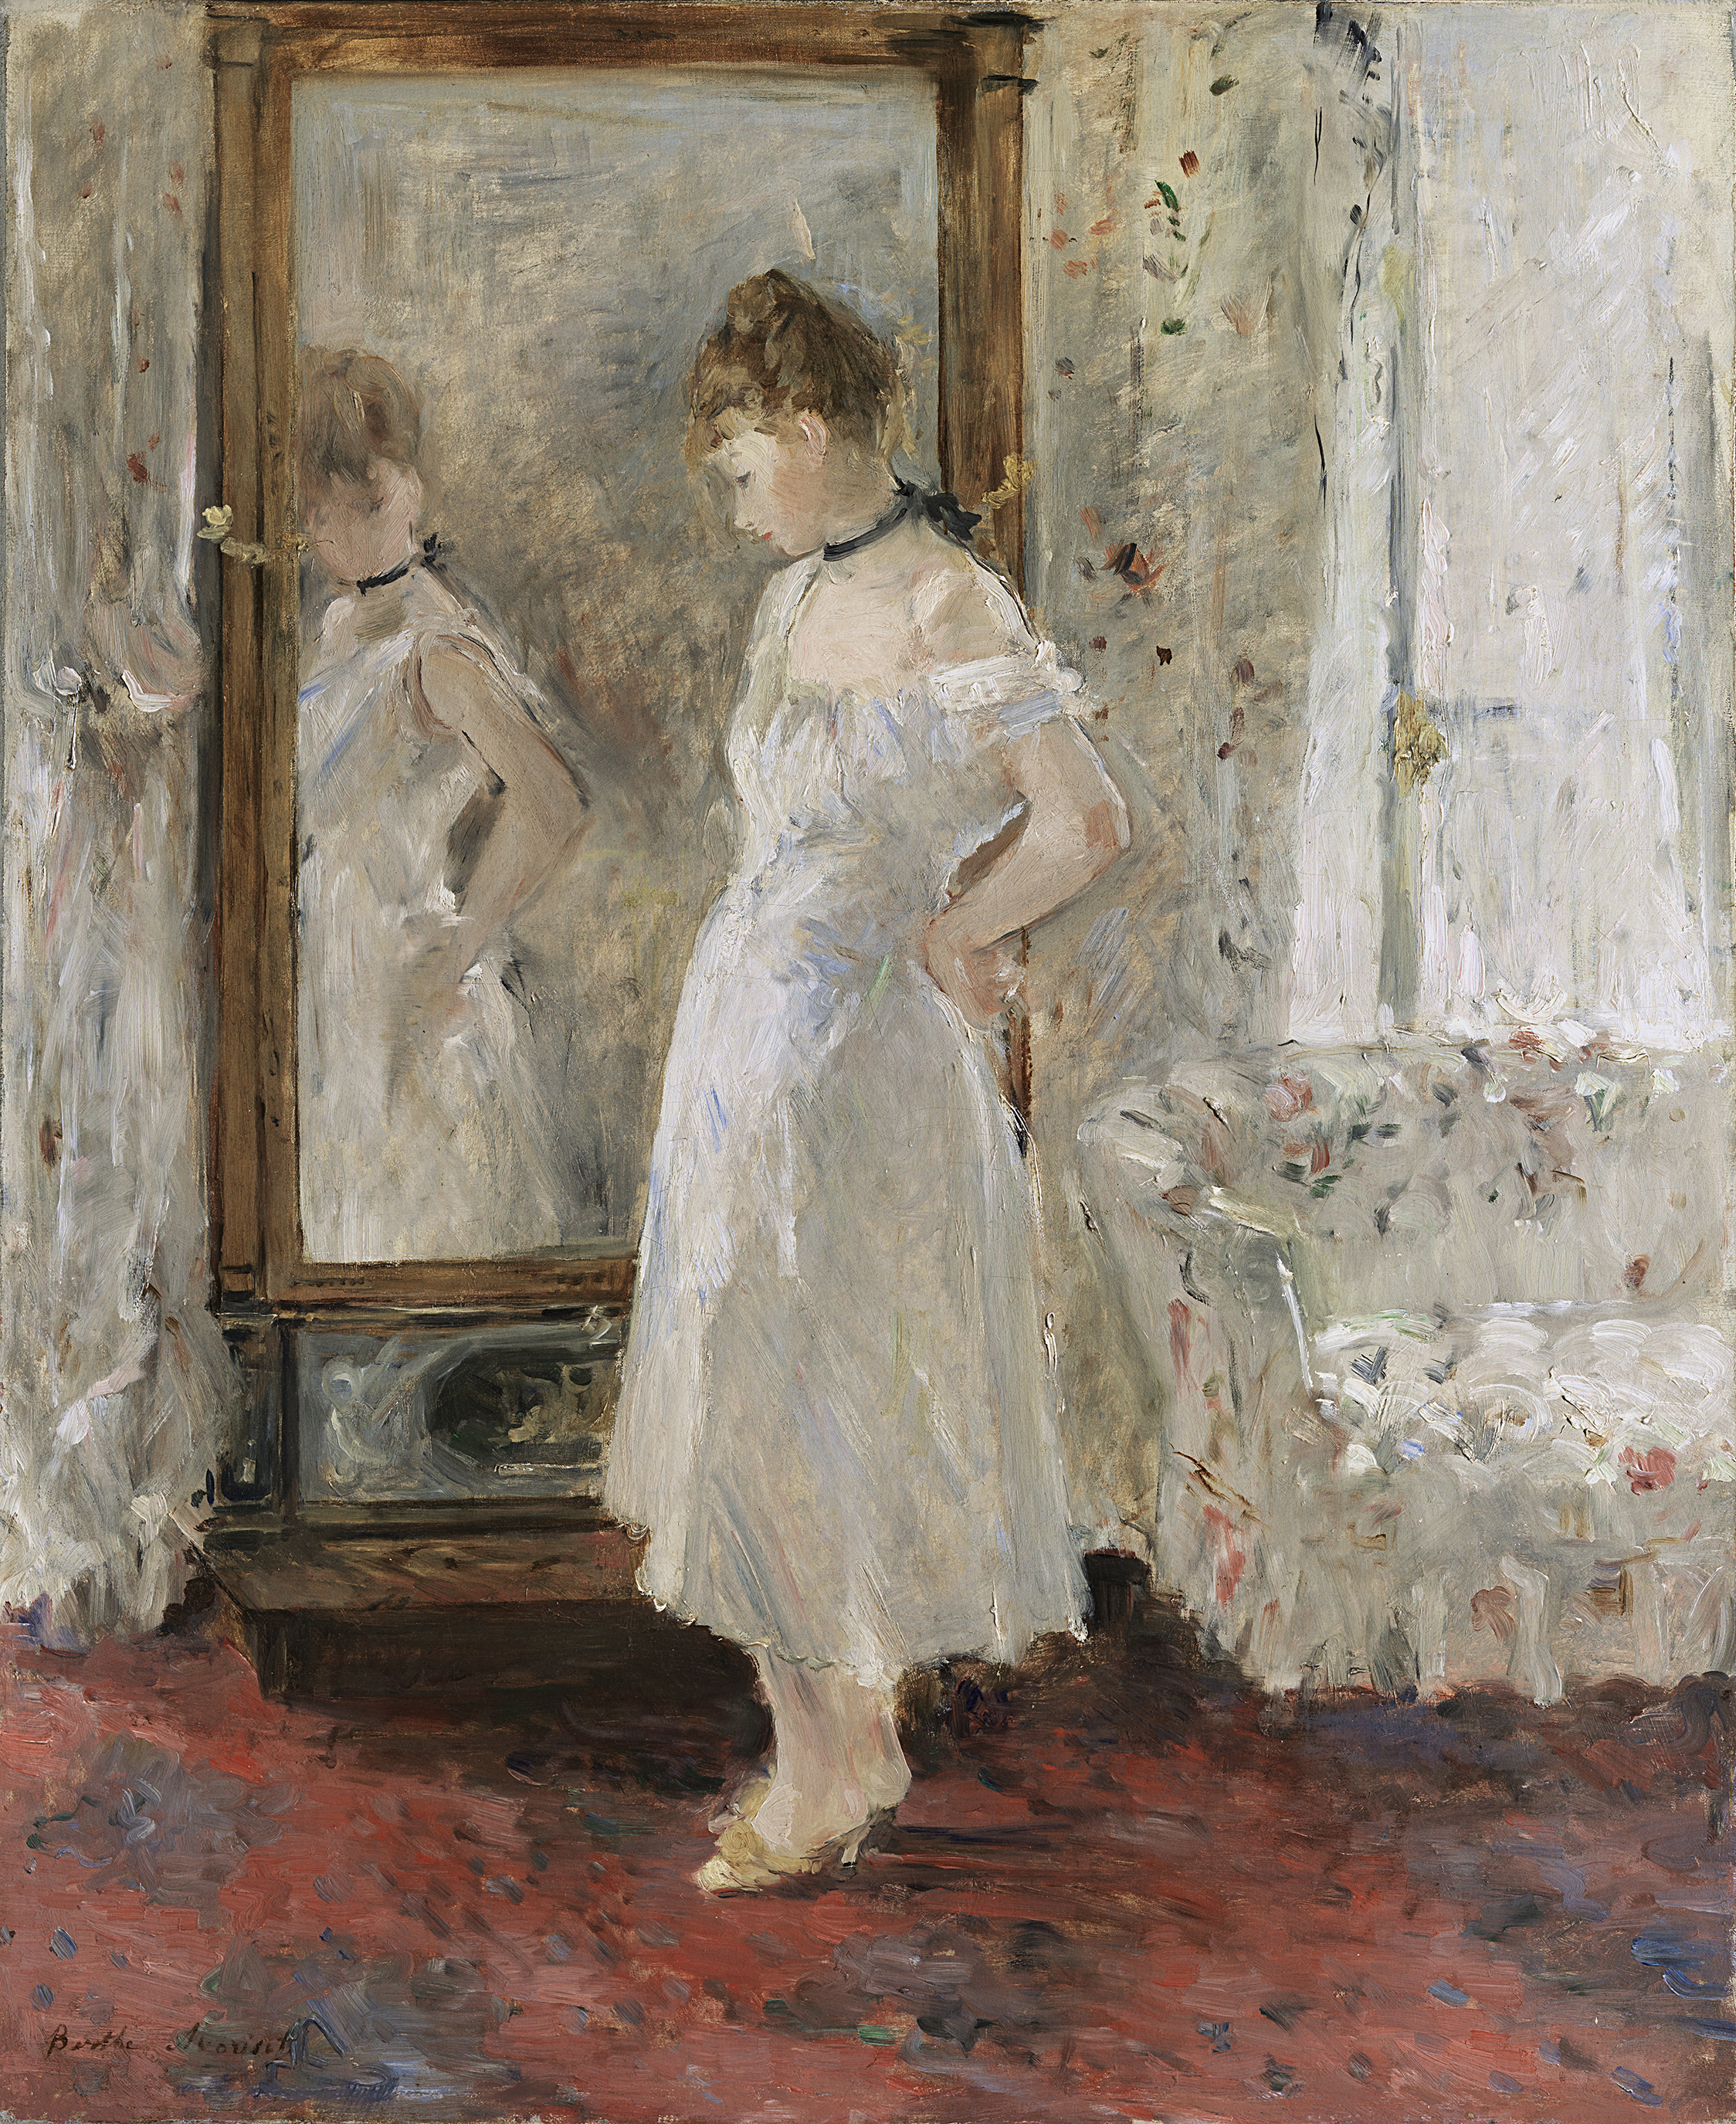 Oglinda sufletului by Berthe Morisot - 1876 - 65 x 54 cm 